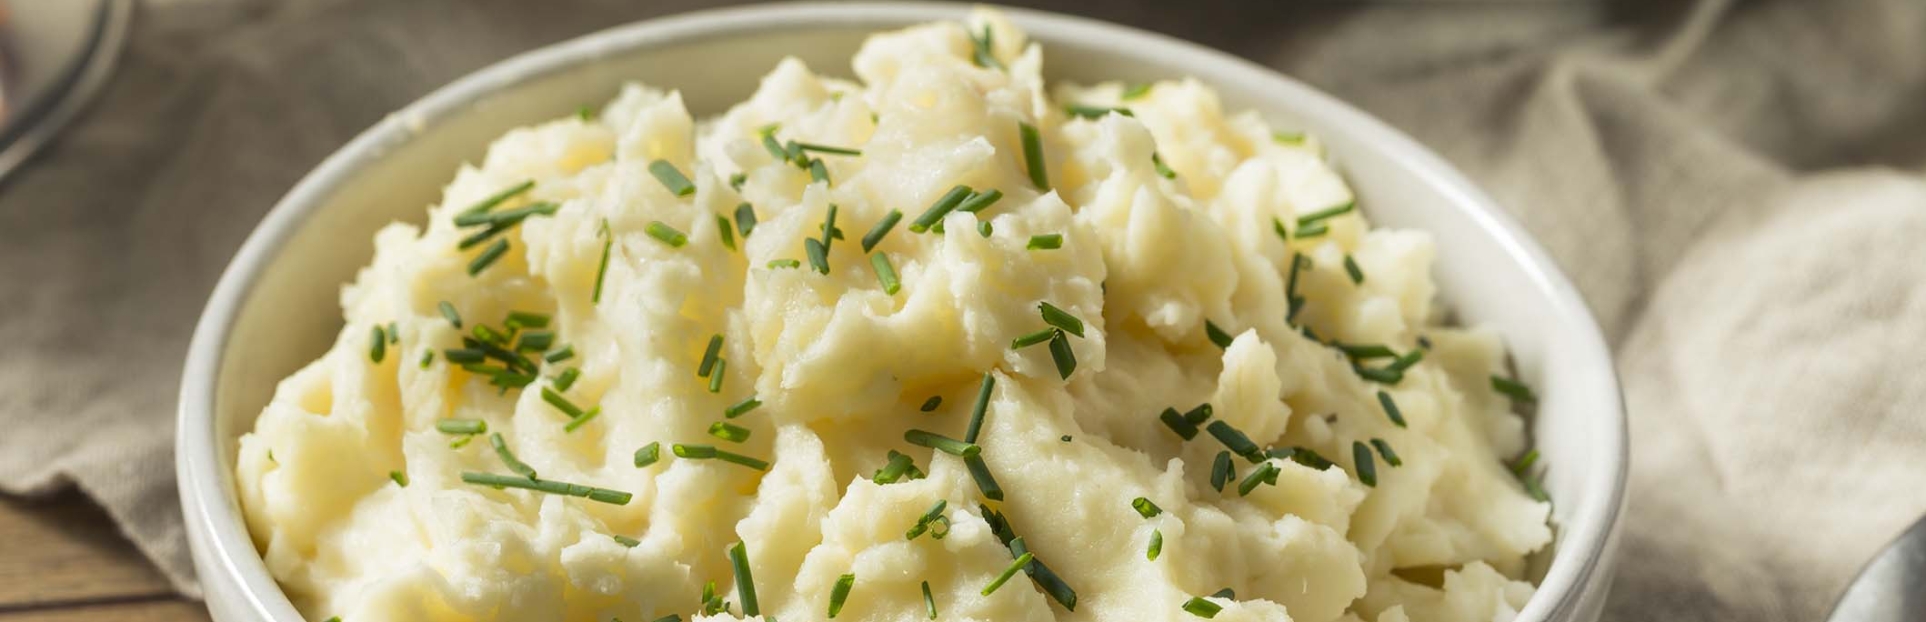 an image of buttermilk mash potato